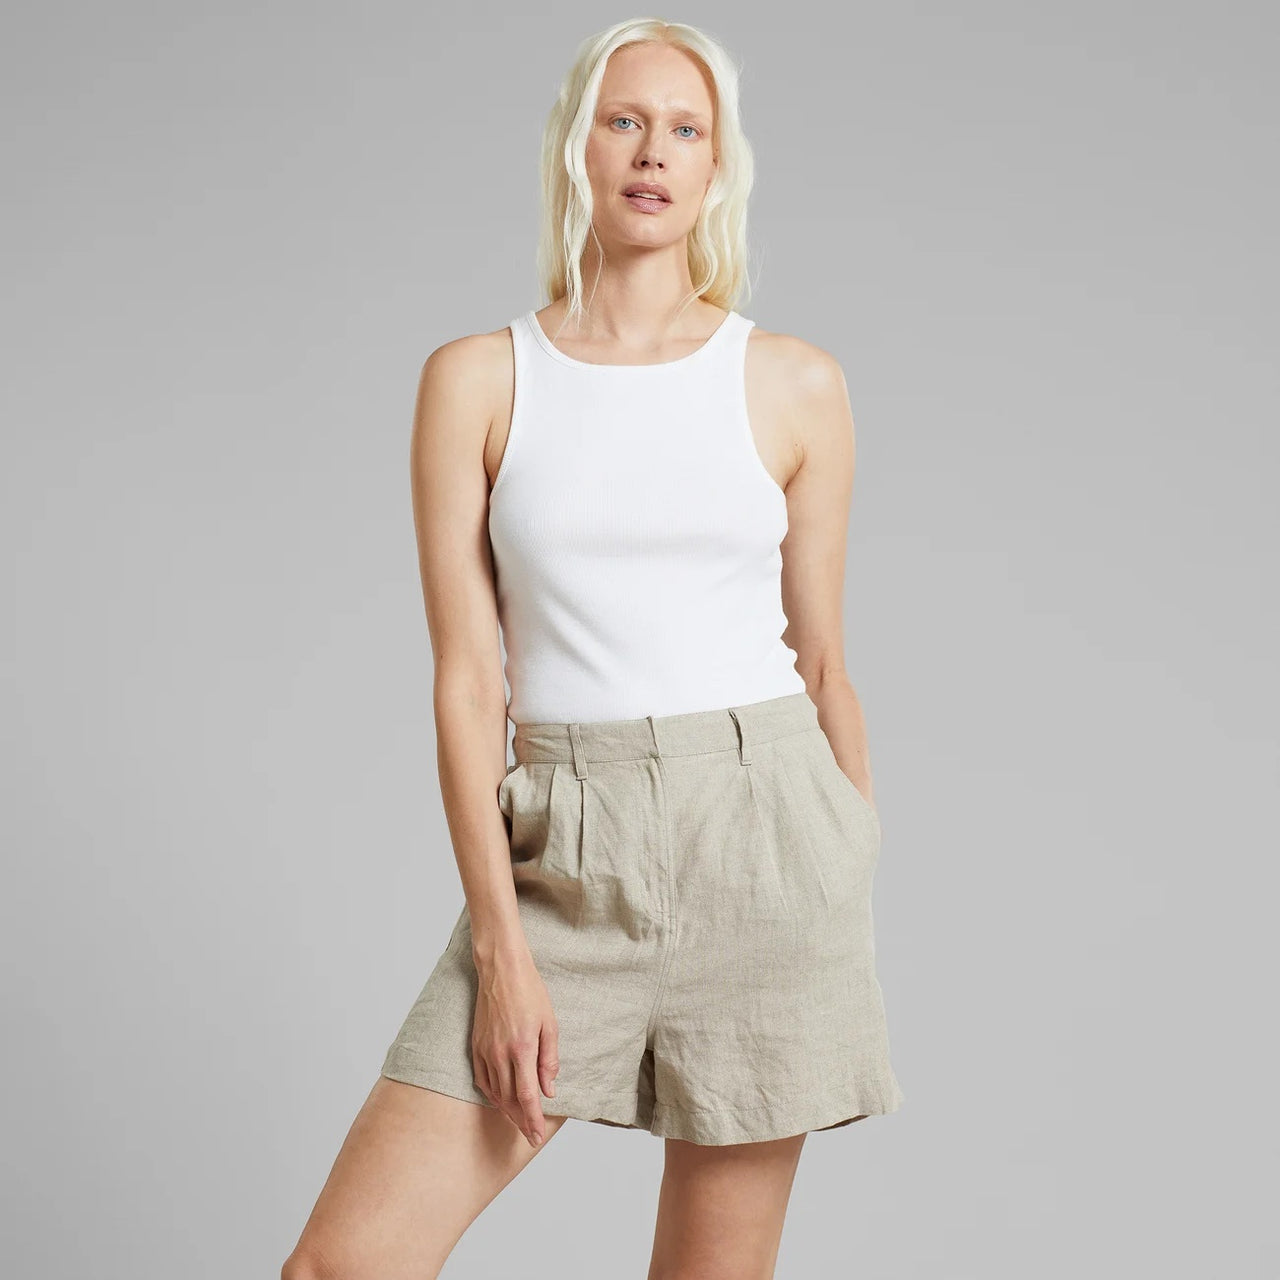 Shorts Djupvik Linen ecru - LEEF mode en accessoires